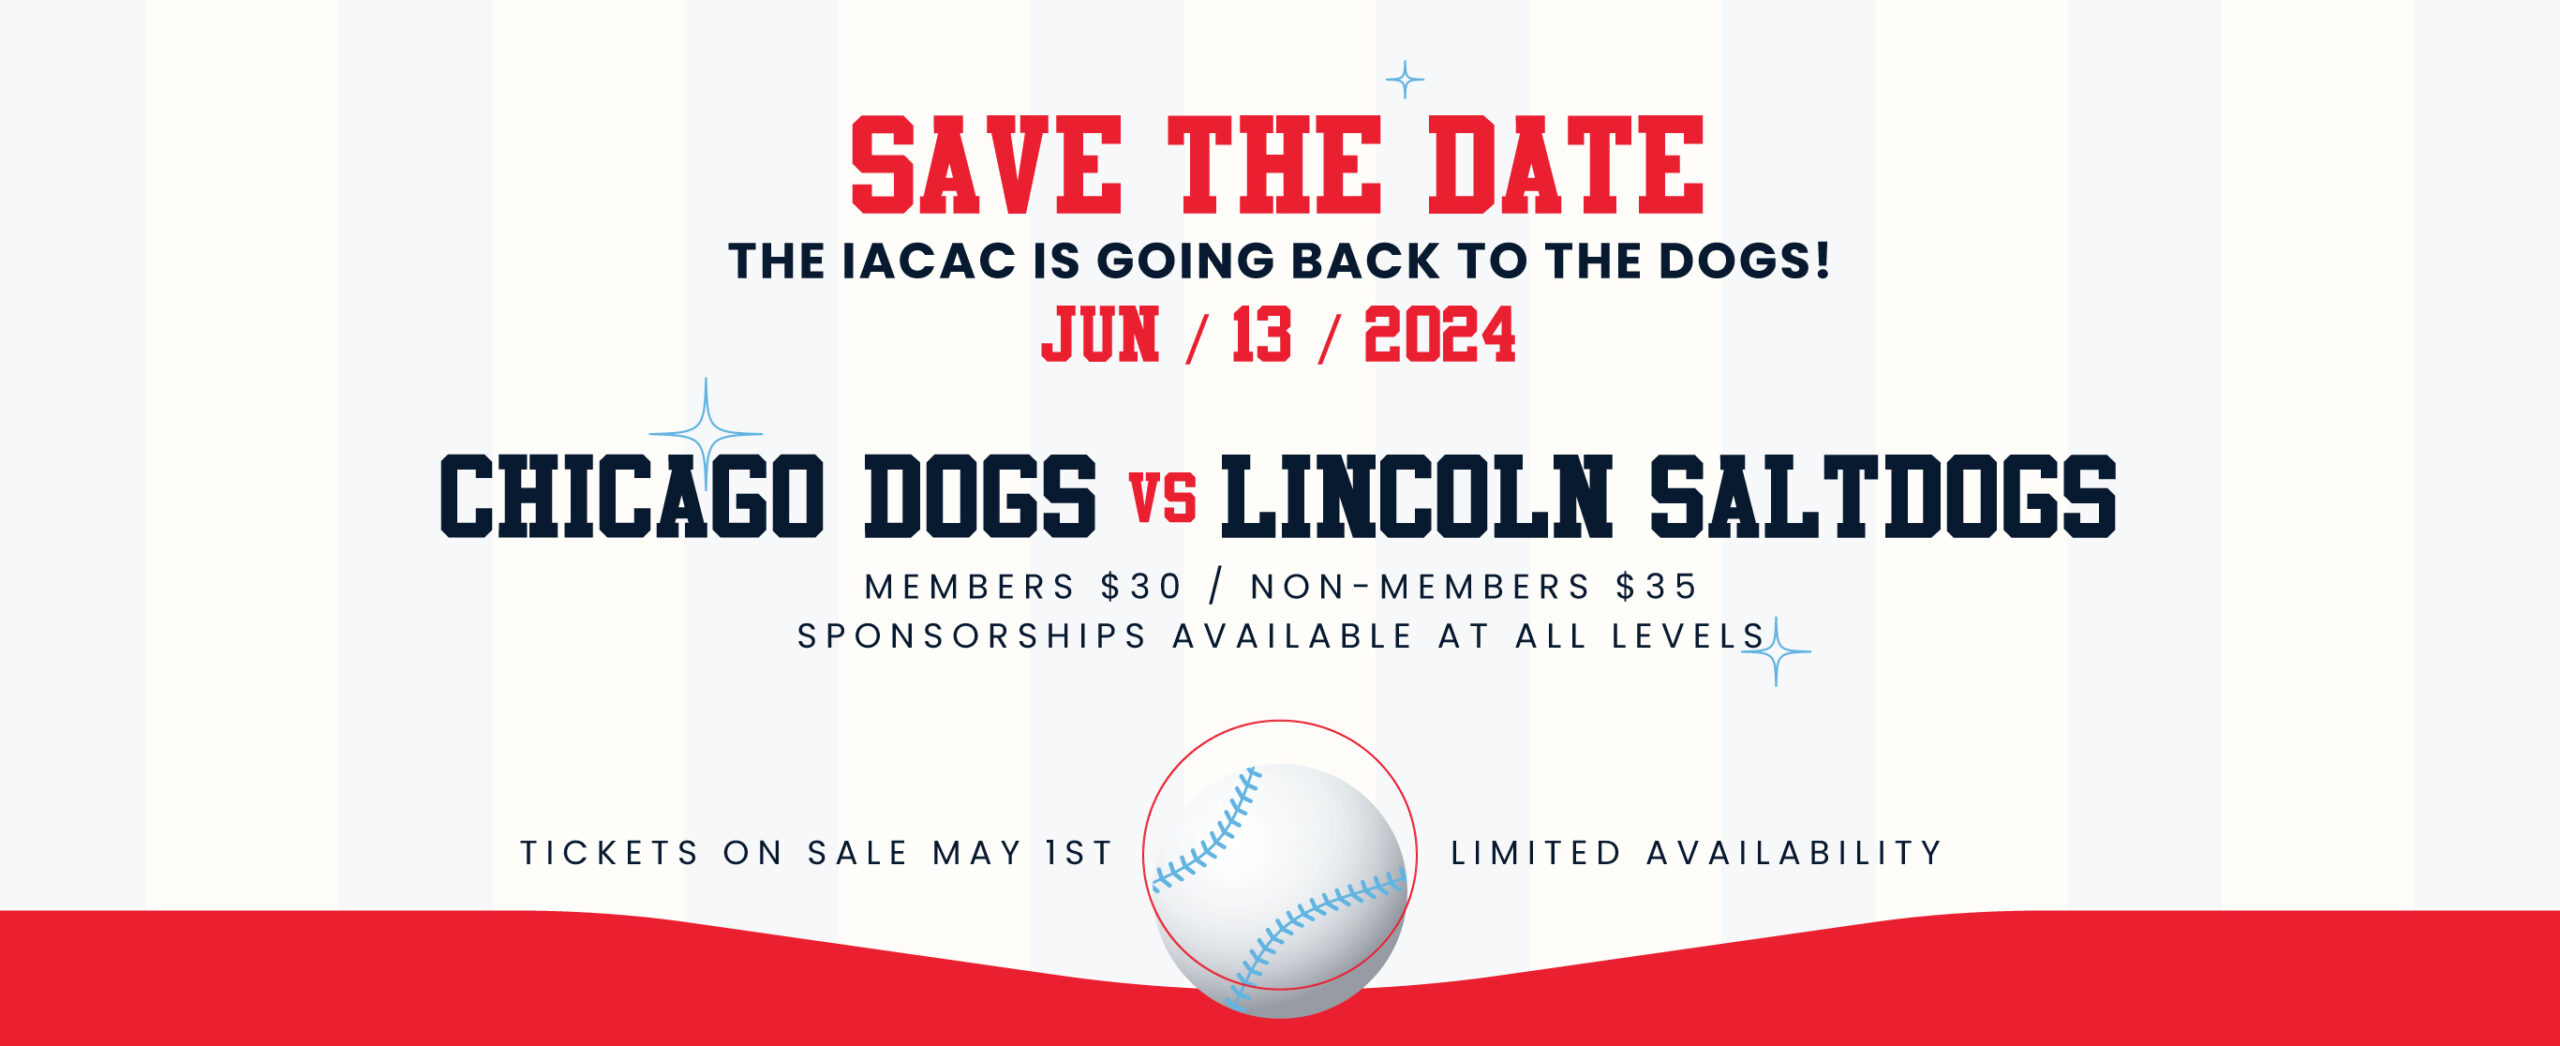 Chicago Dogs Vs. Lincoln Saltdogs